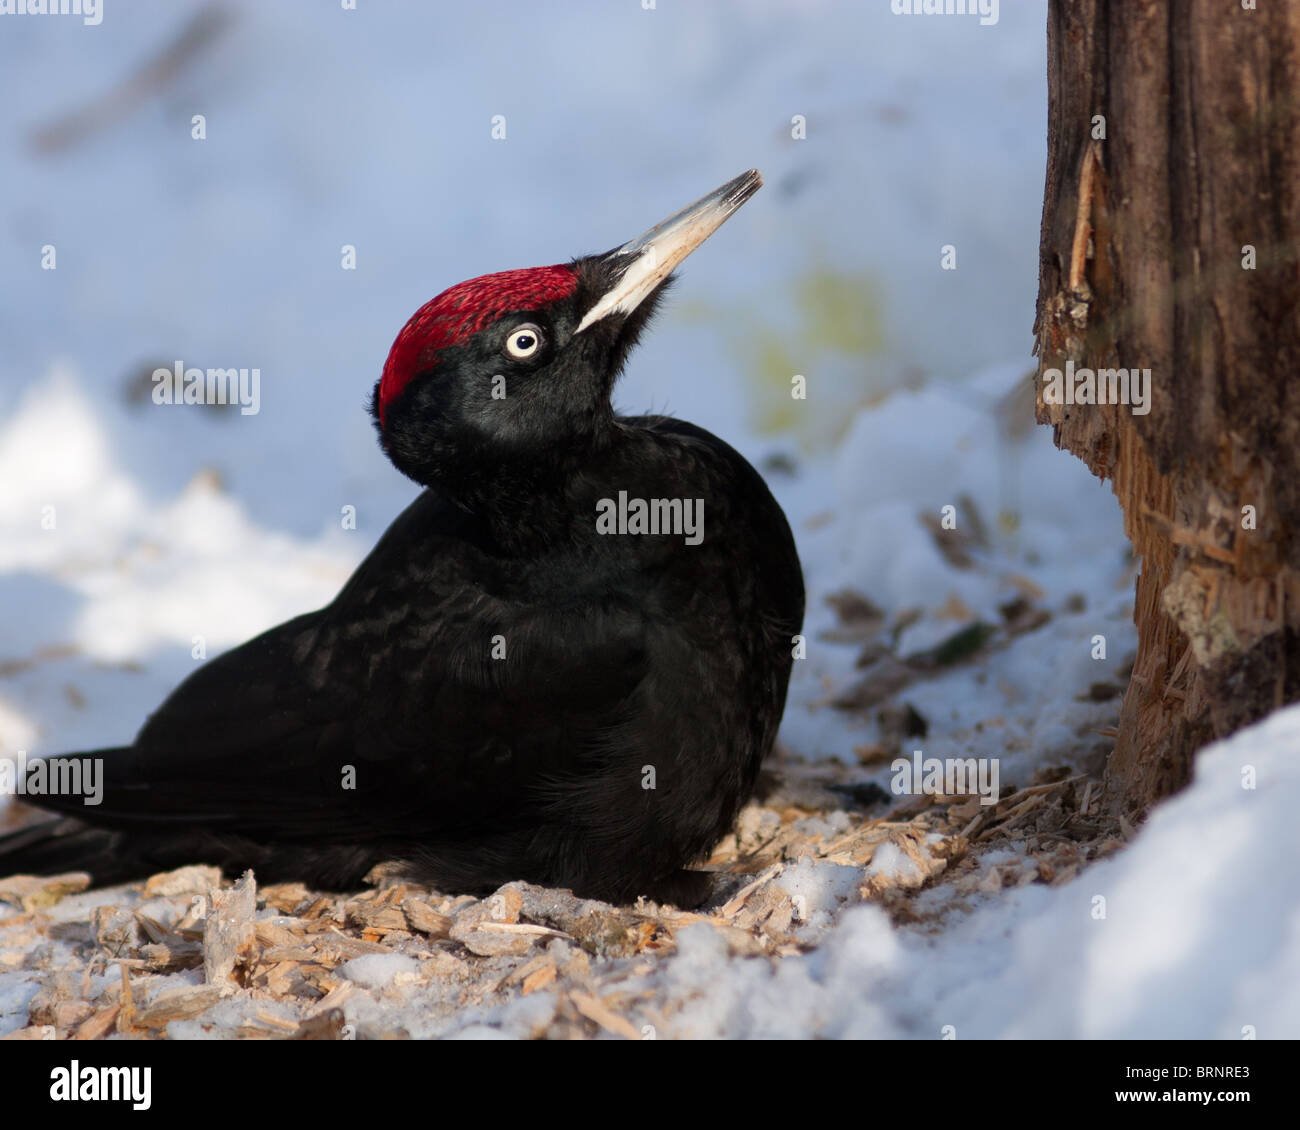 The Black woodpecker (Dryocopus martius) is in the park. Stock Photo